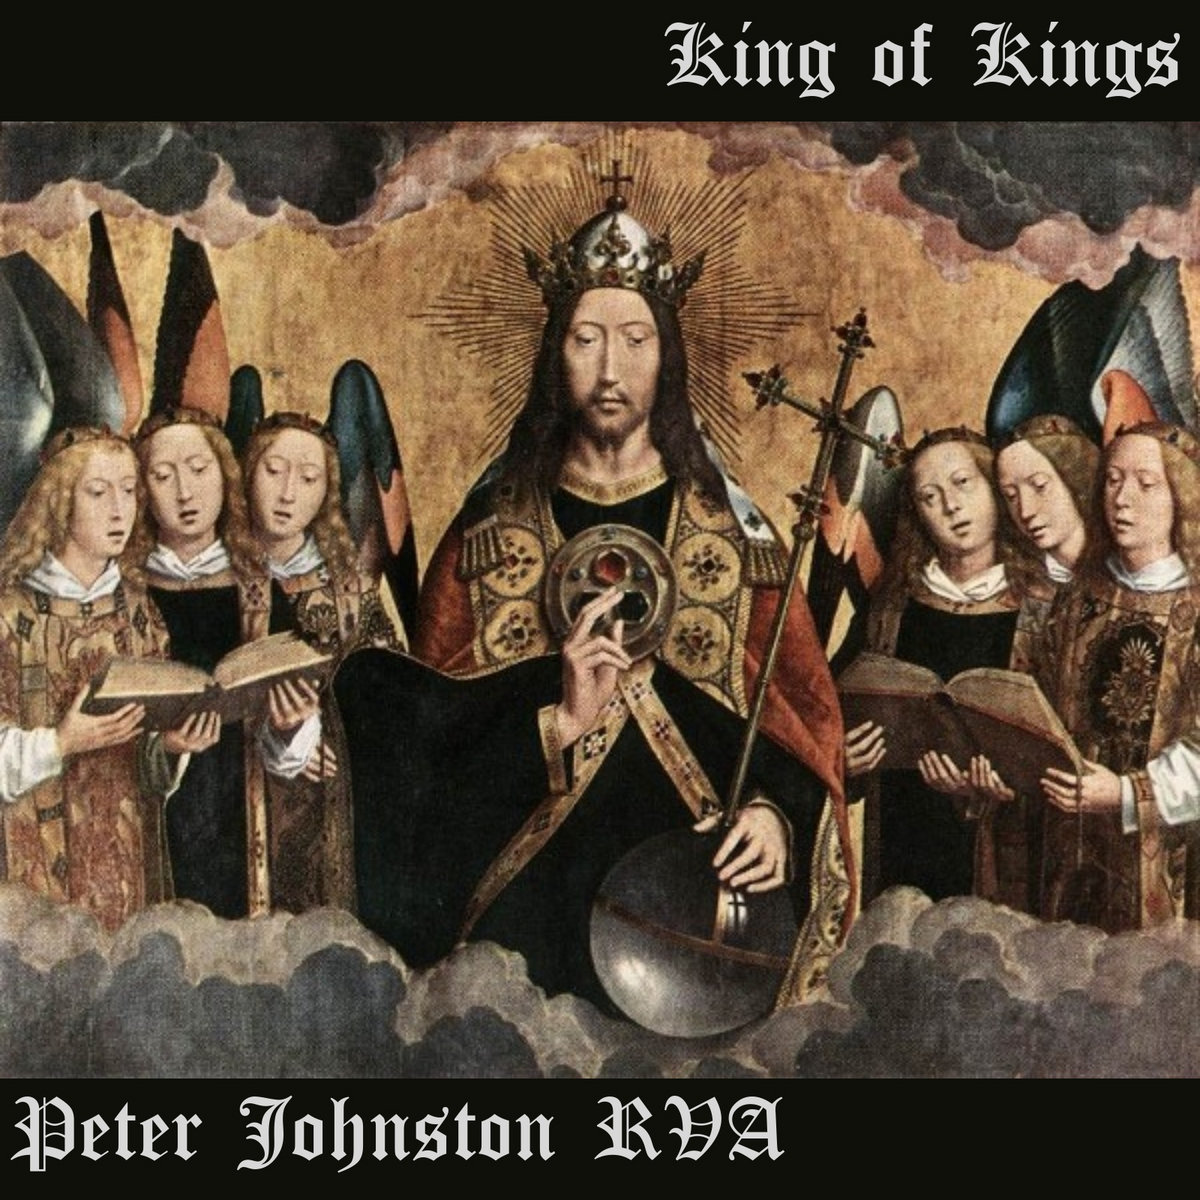 Peter Johnston RVA - King of Kings